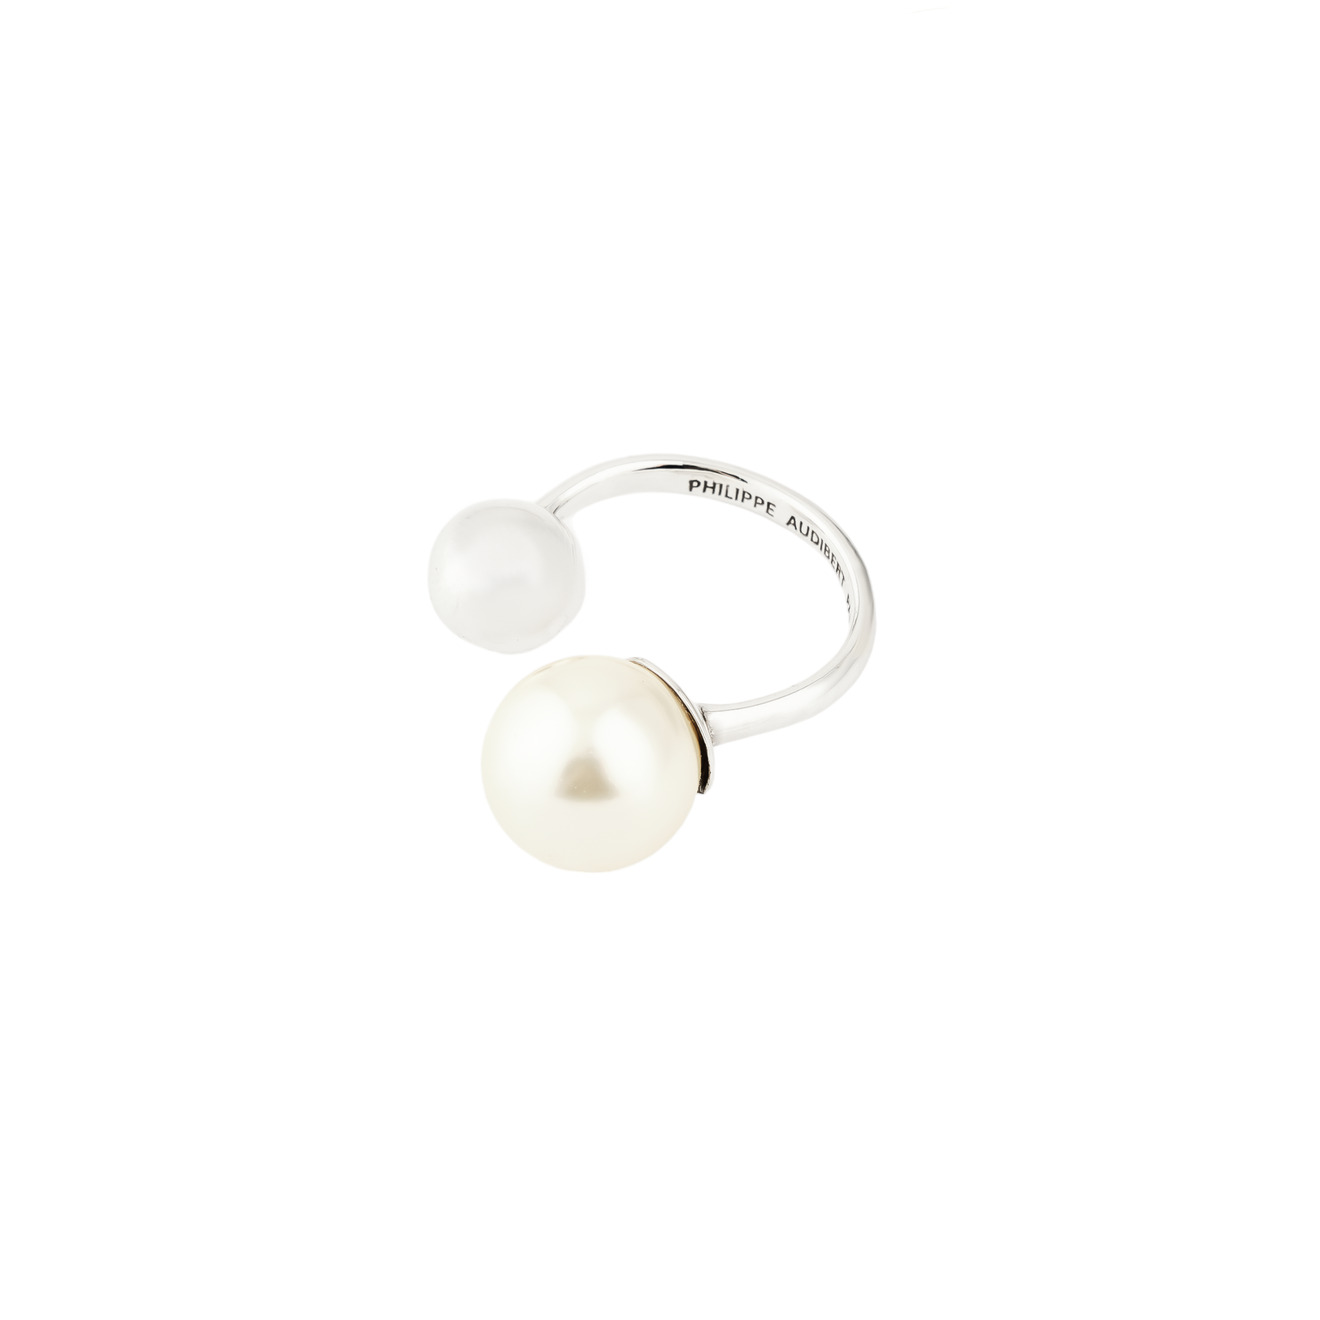 Philippe Audibert Кольцо Dina L glass pearl с серебряным покрытием philippe audibert браслет pia pearl chain с серебряным покрытием